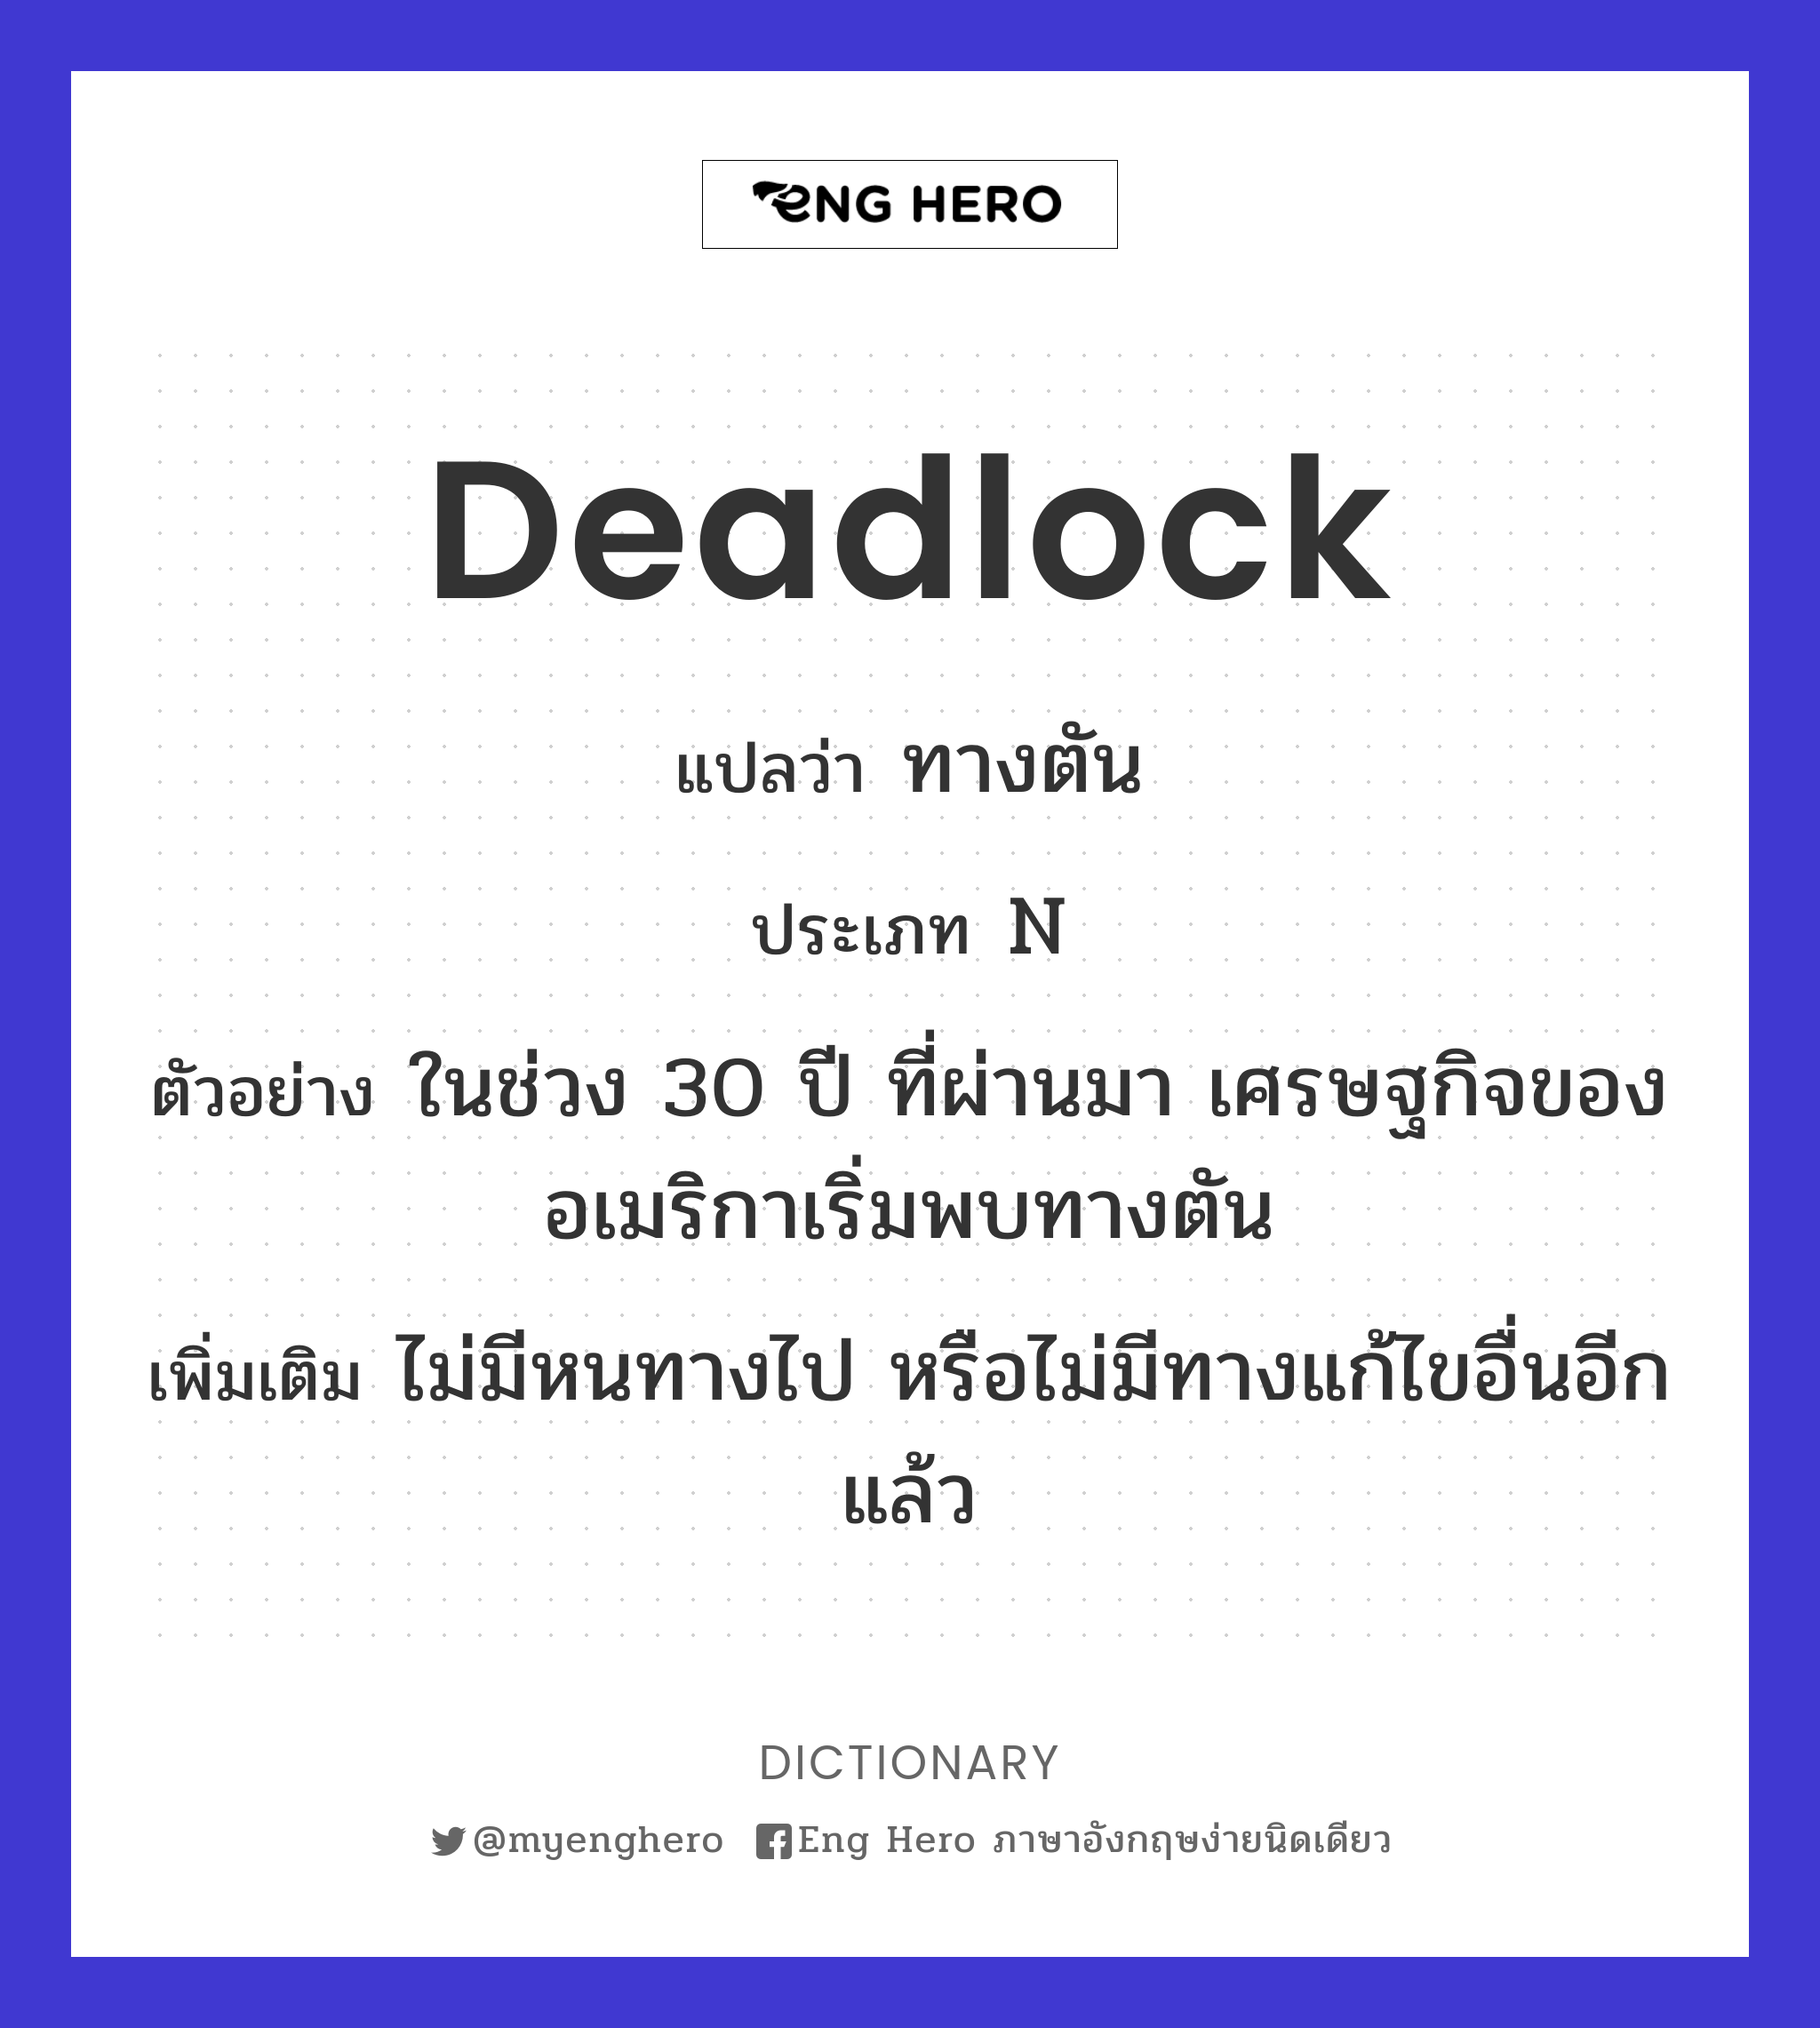 deadlock